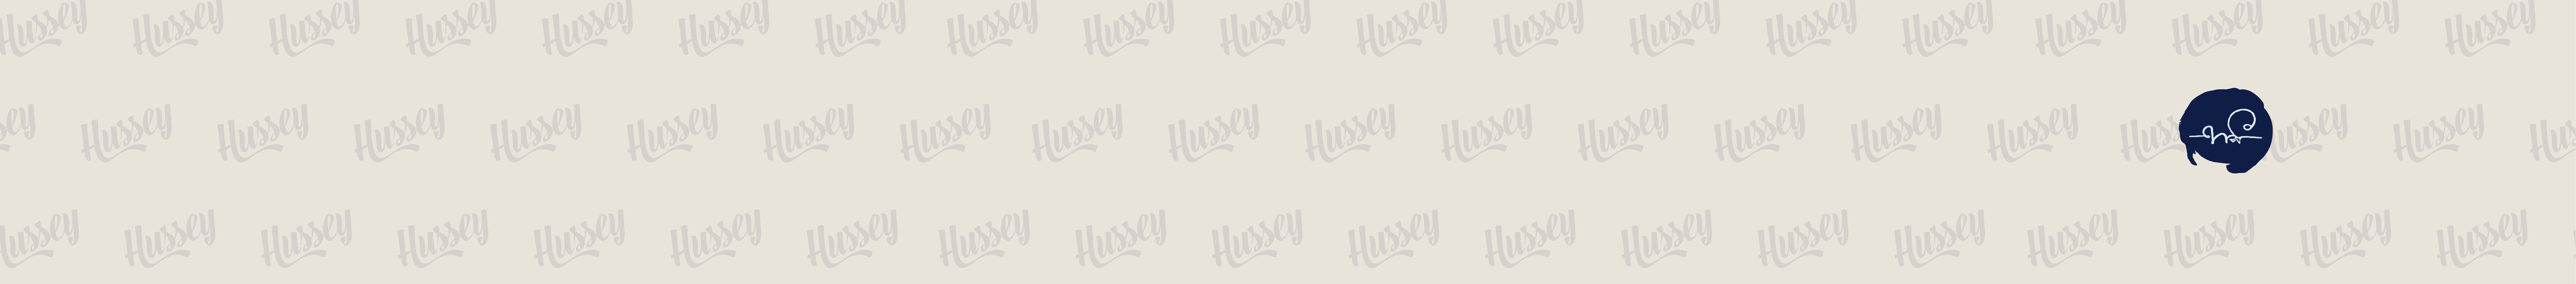 HUSSEY 380 のプロファイルバナー